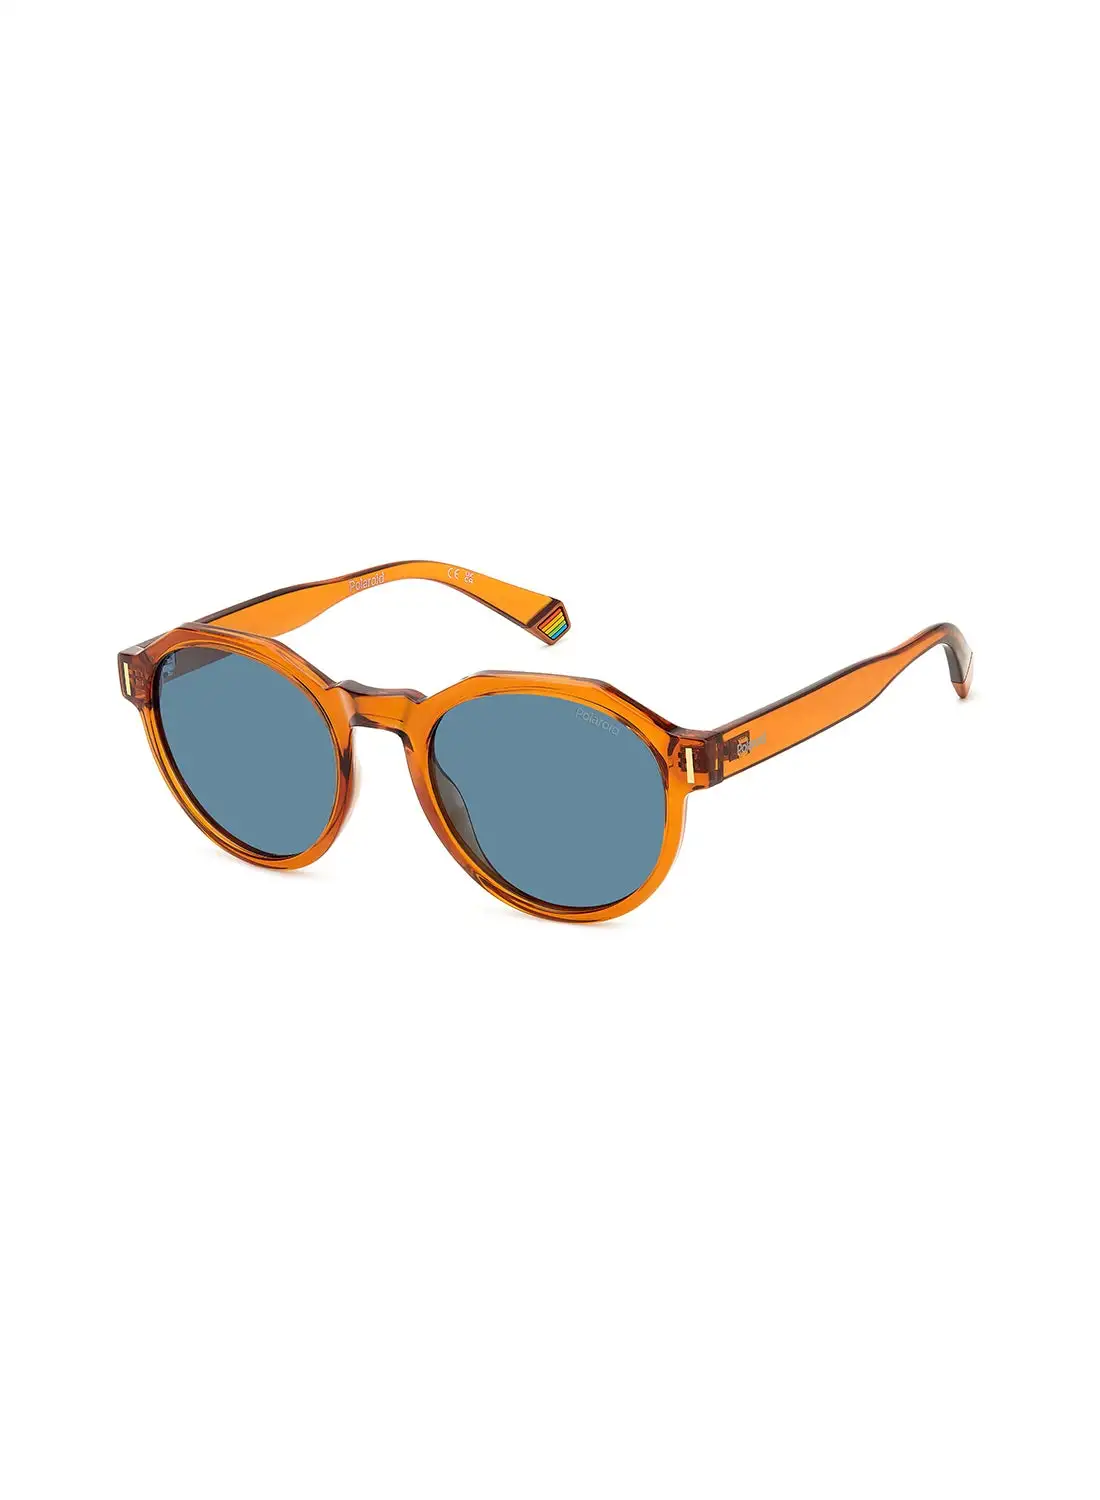 Polaroid Unisex Polarized Round Sunglasses - Pld 6207/S Orange Millimeter - Lens Size: 52 Mm